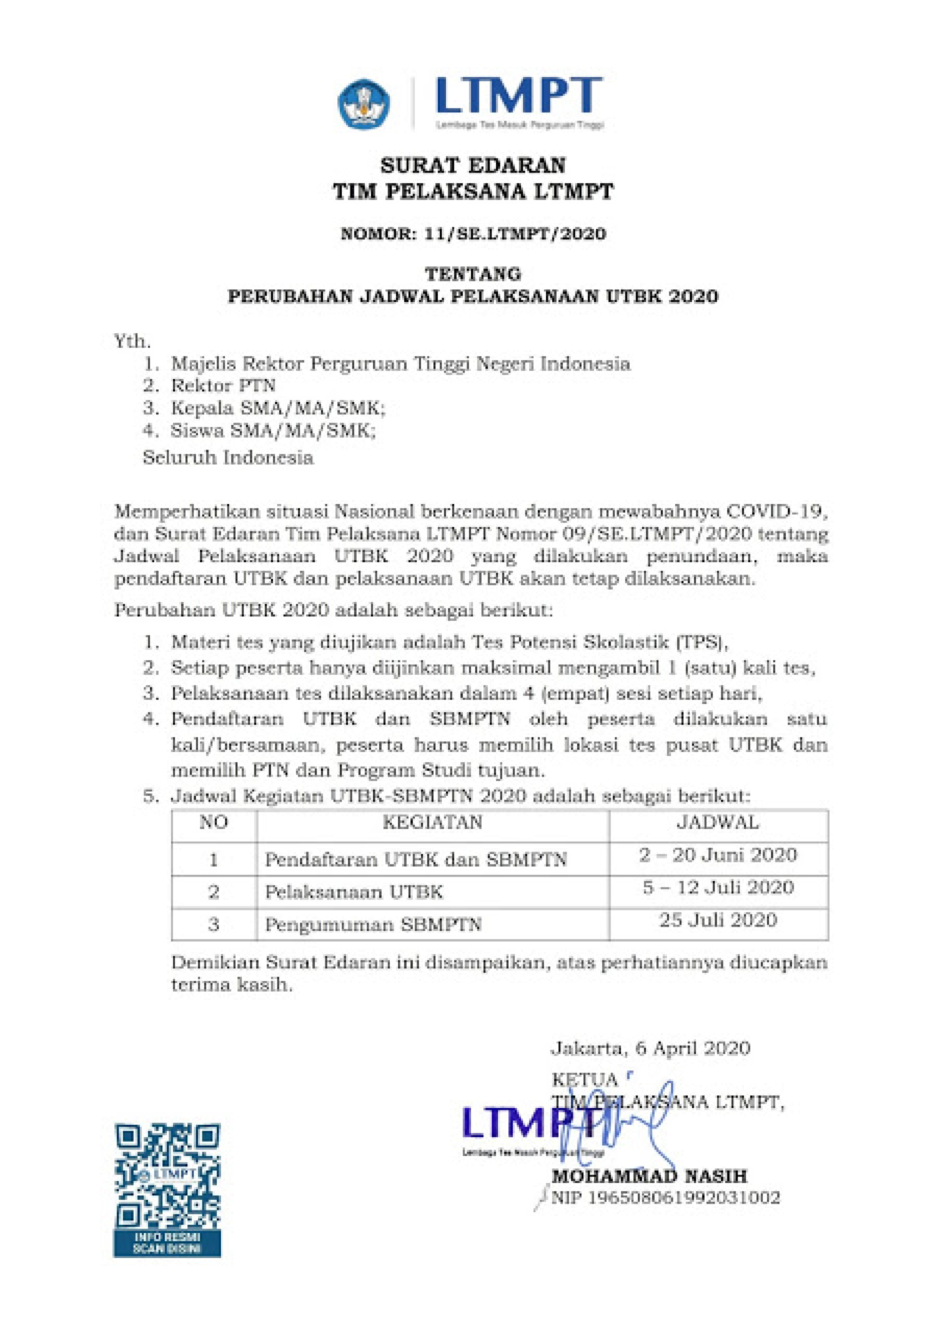 Surat edaran LTMPT Jadwal UTBK dan SBMPTN 2020